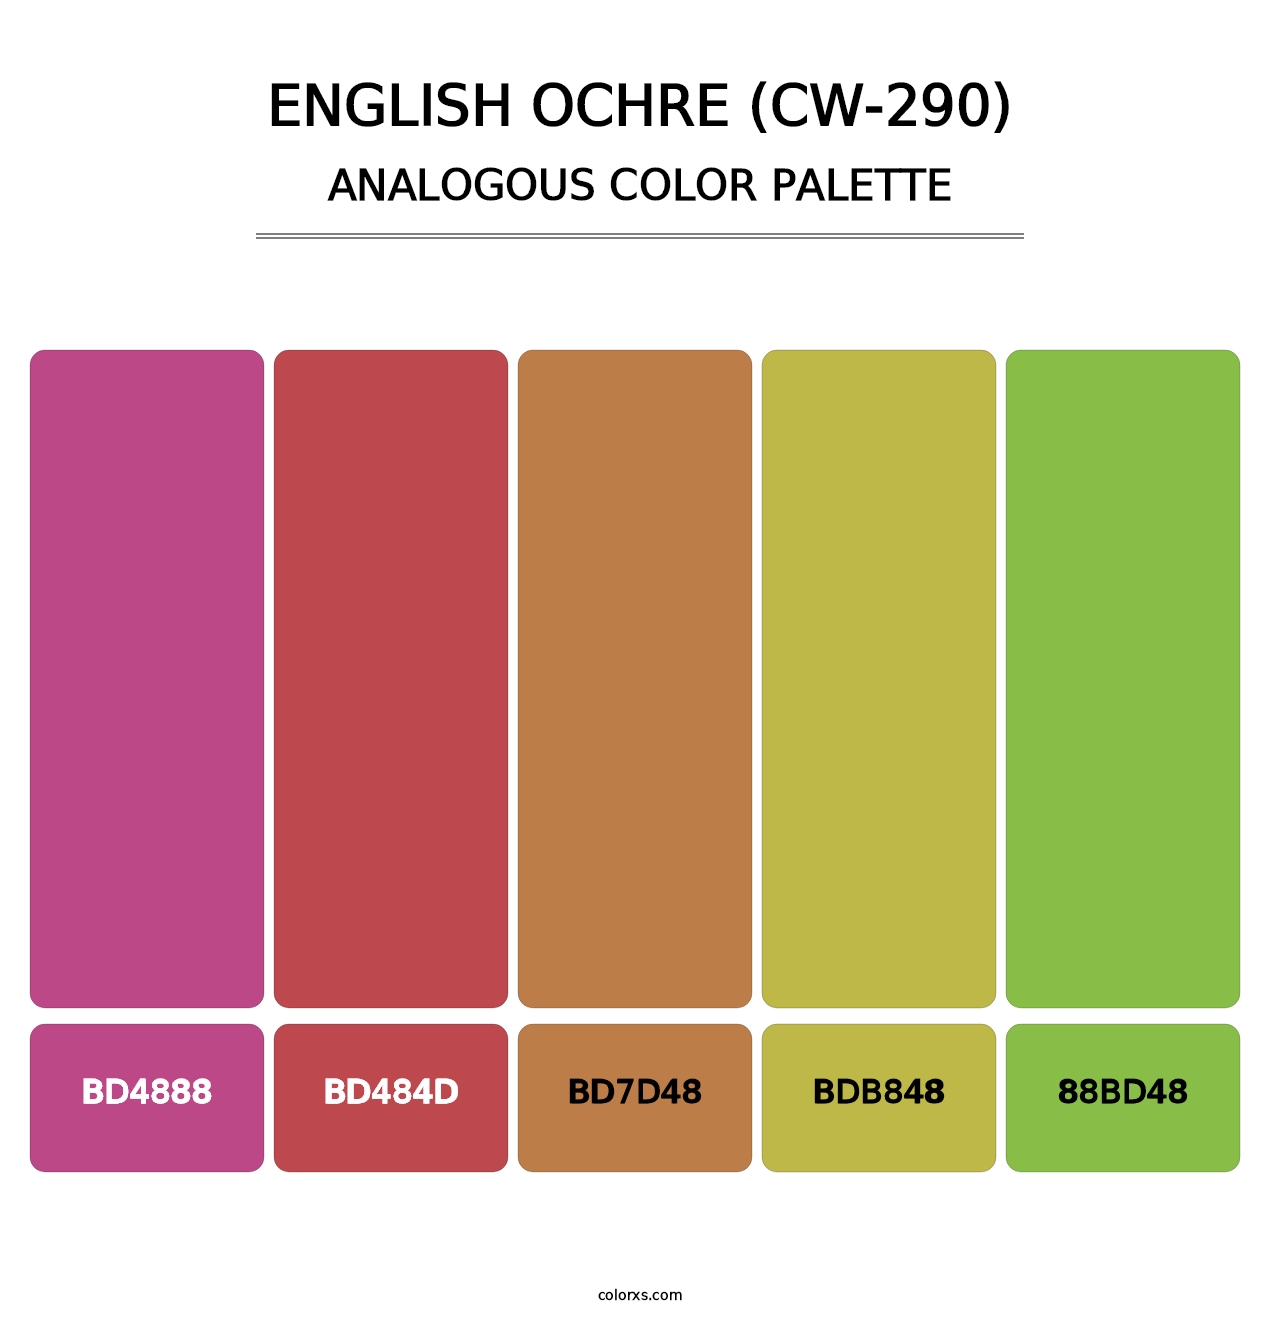 English Ochre (CW-290) - Analogous Color Palette